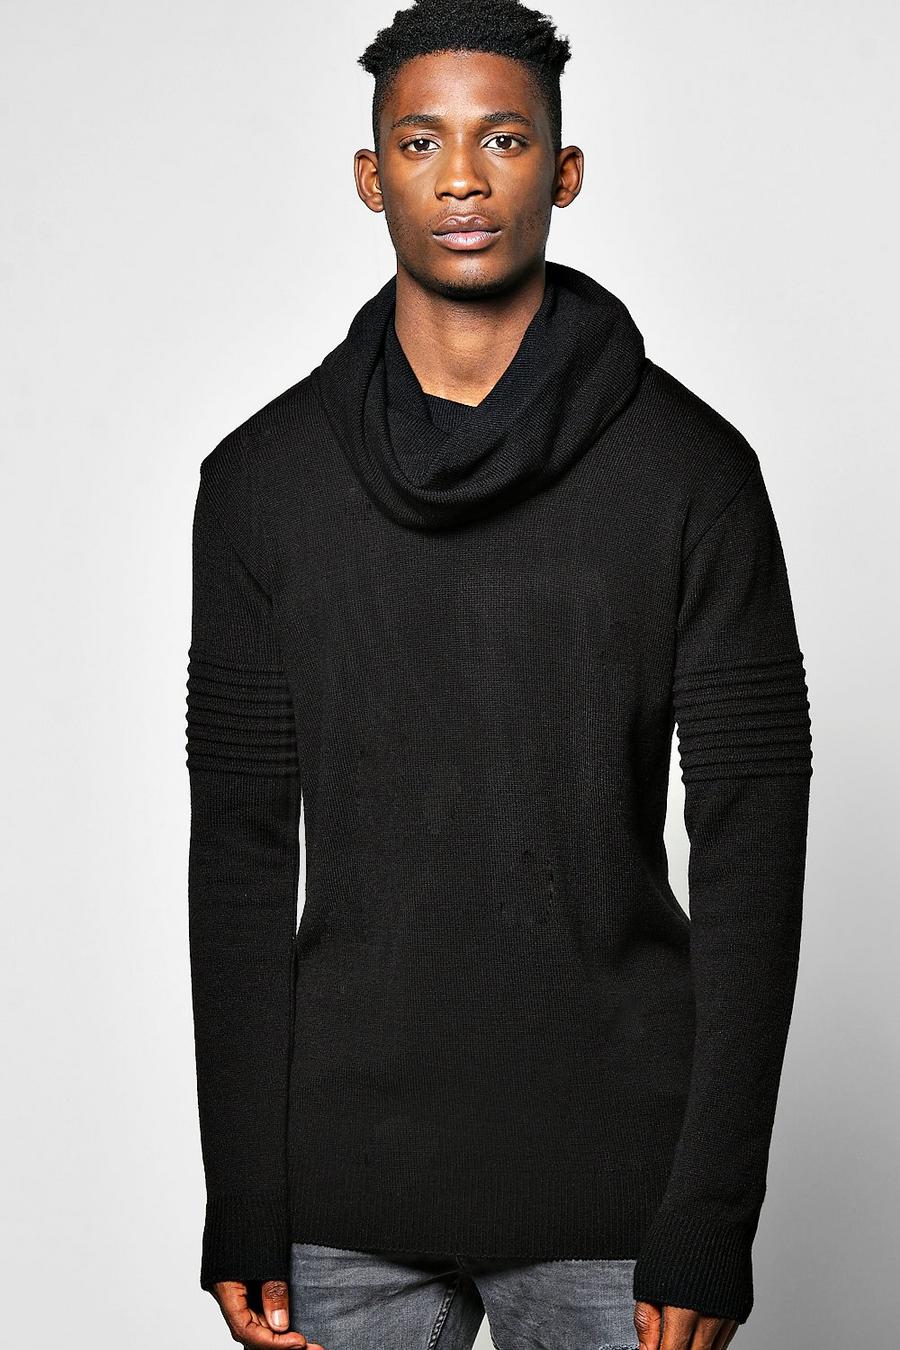 https://media.boohoo.com/i/boohoo/mzz77270_black_xl/male-black-cowl-neck-sweater/?w=900&qlt=default&fmt.jp2.qlt=70&fmt=auto&sm=fit